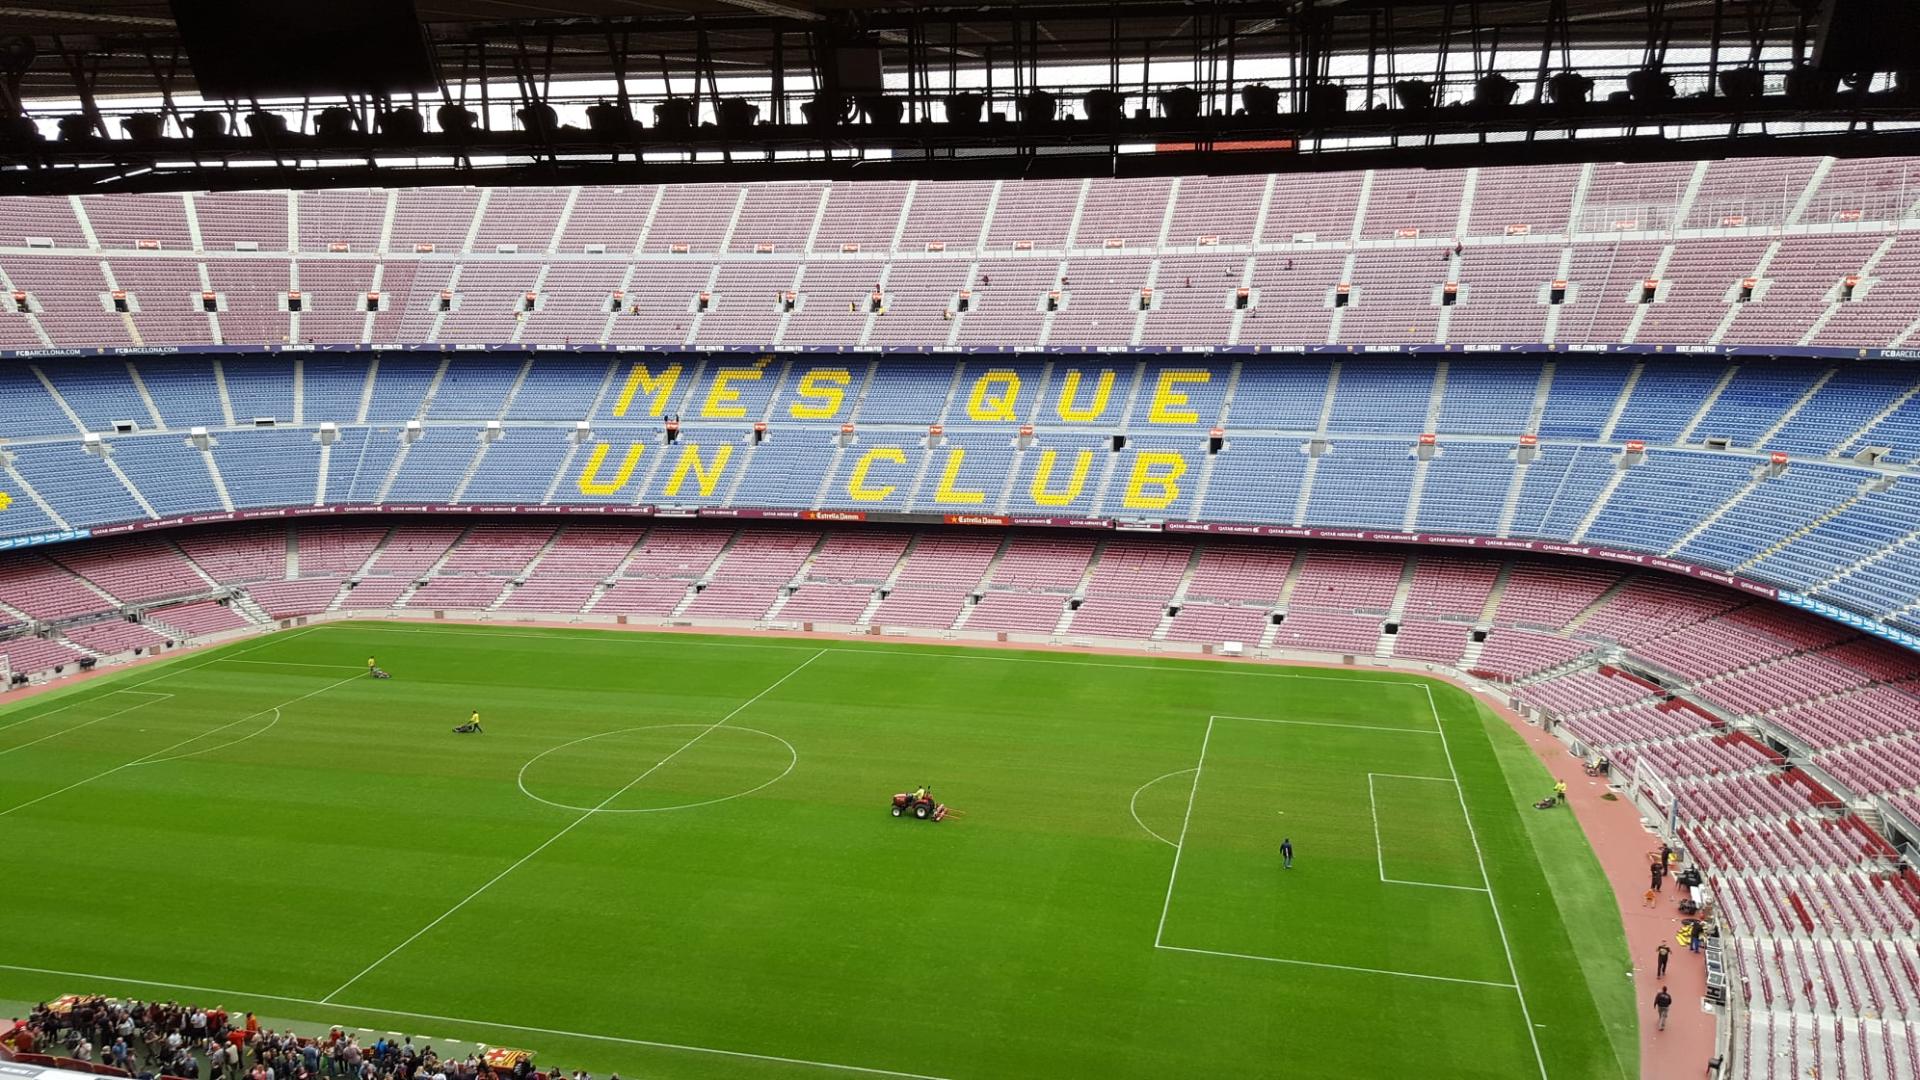 Stadion in Barcelona